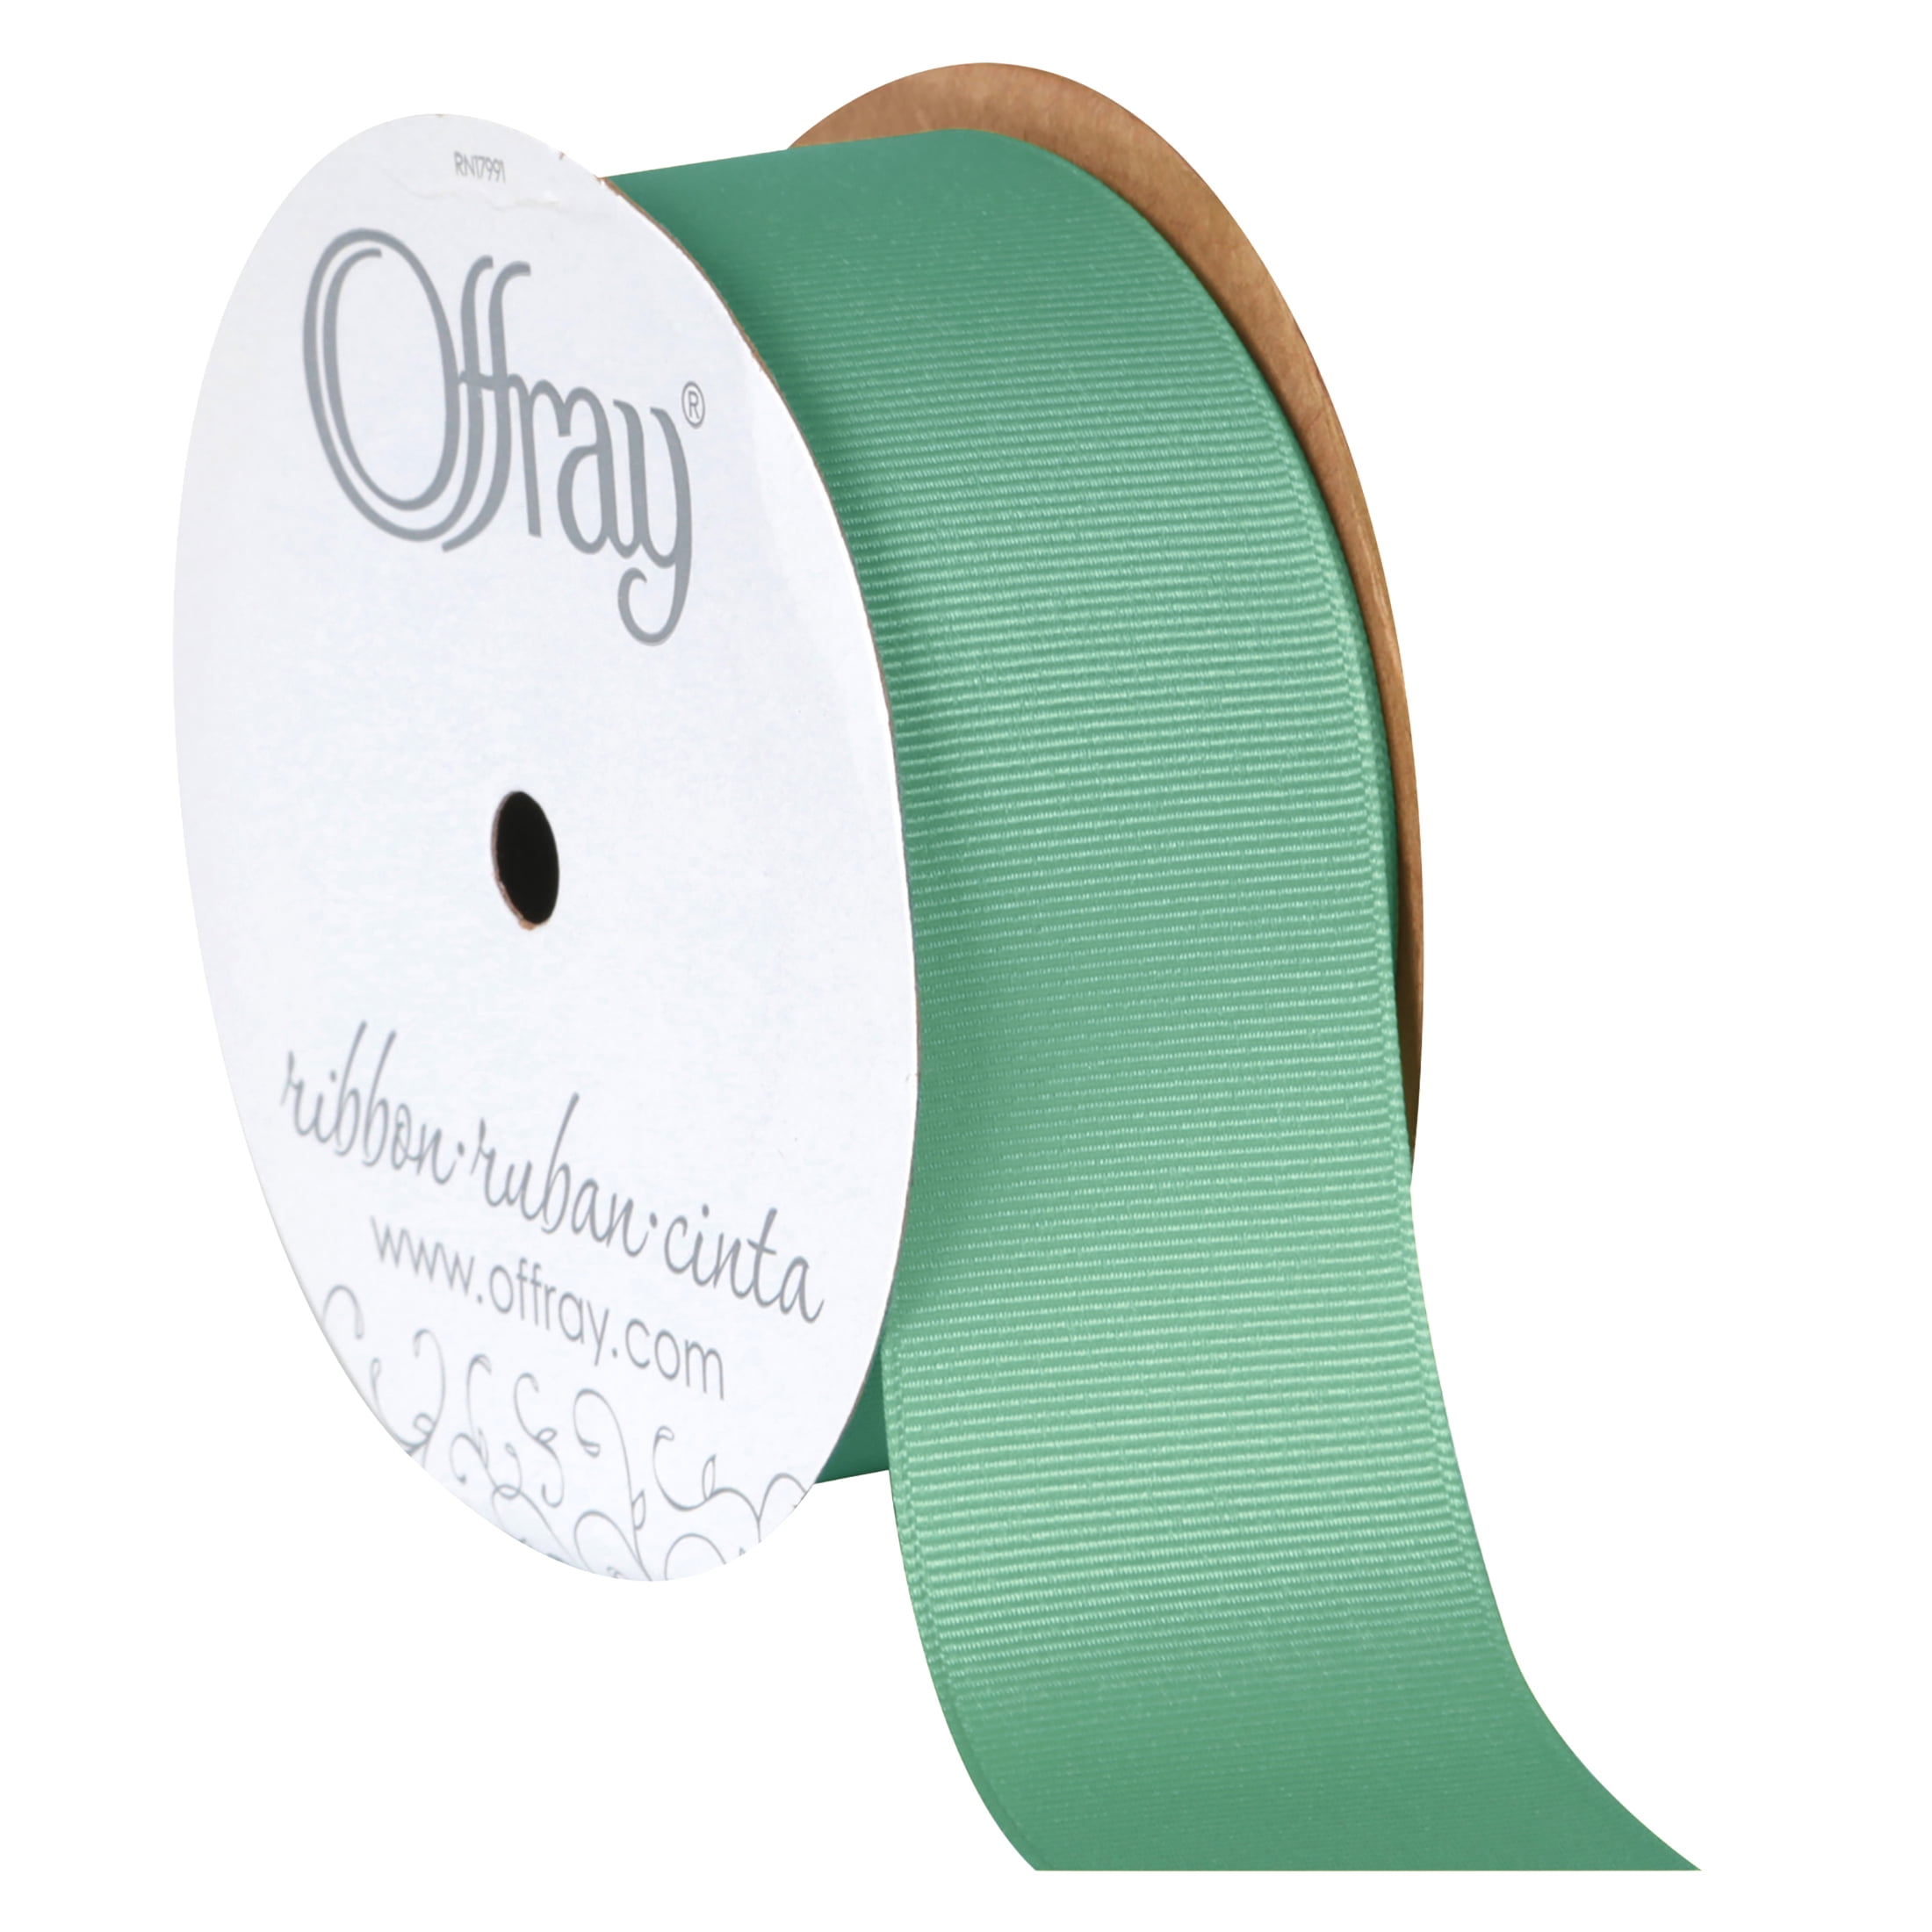 Offray Teagan Ribbon Green Ribbon SECOND QUALITY FLAWED Dark Shale Ribbon 1 1/2 inches wide x 10 yards